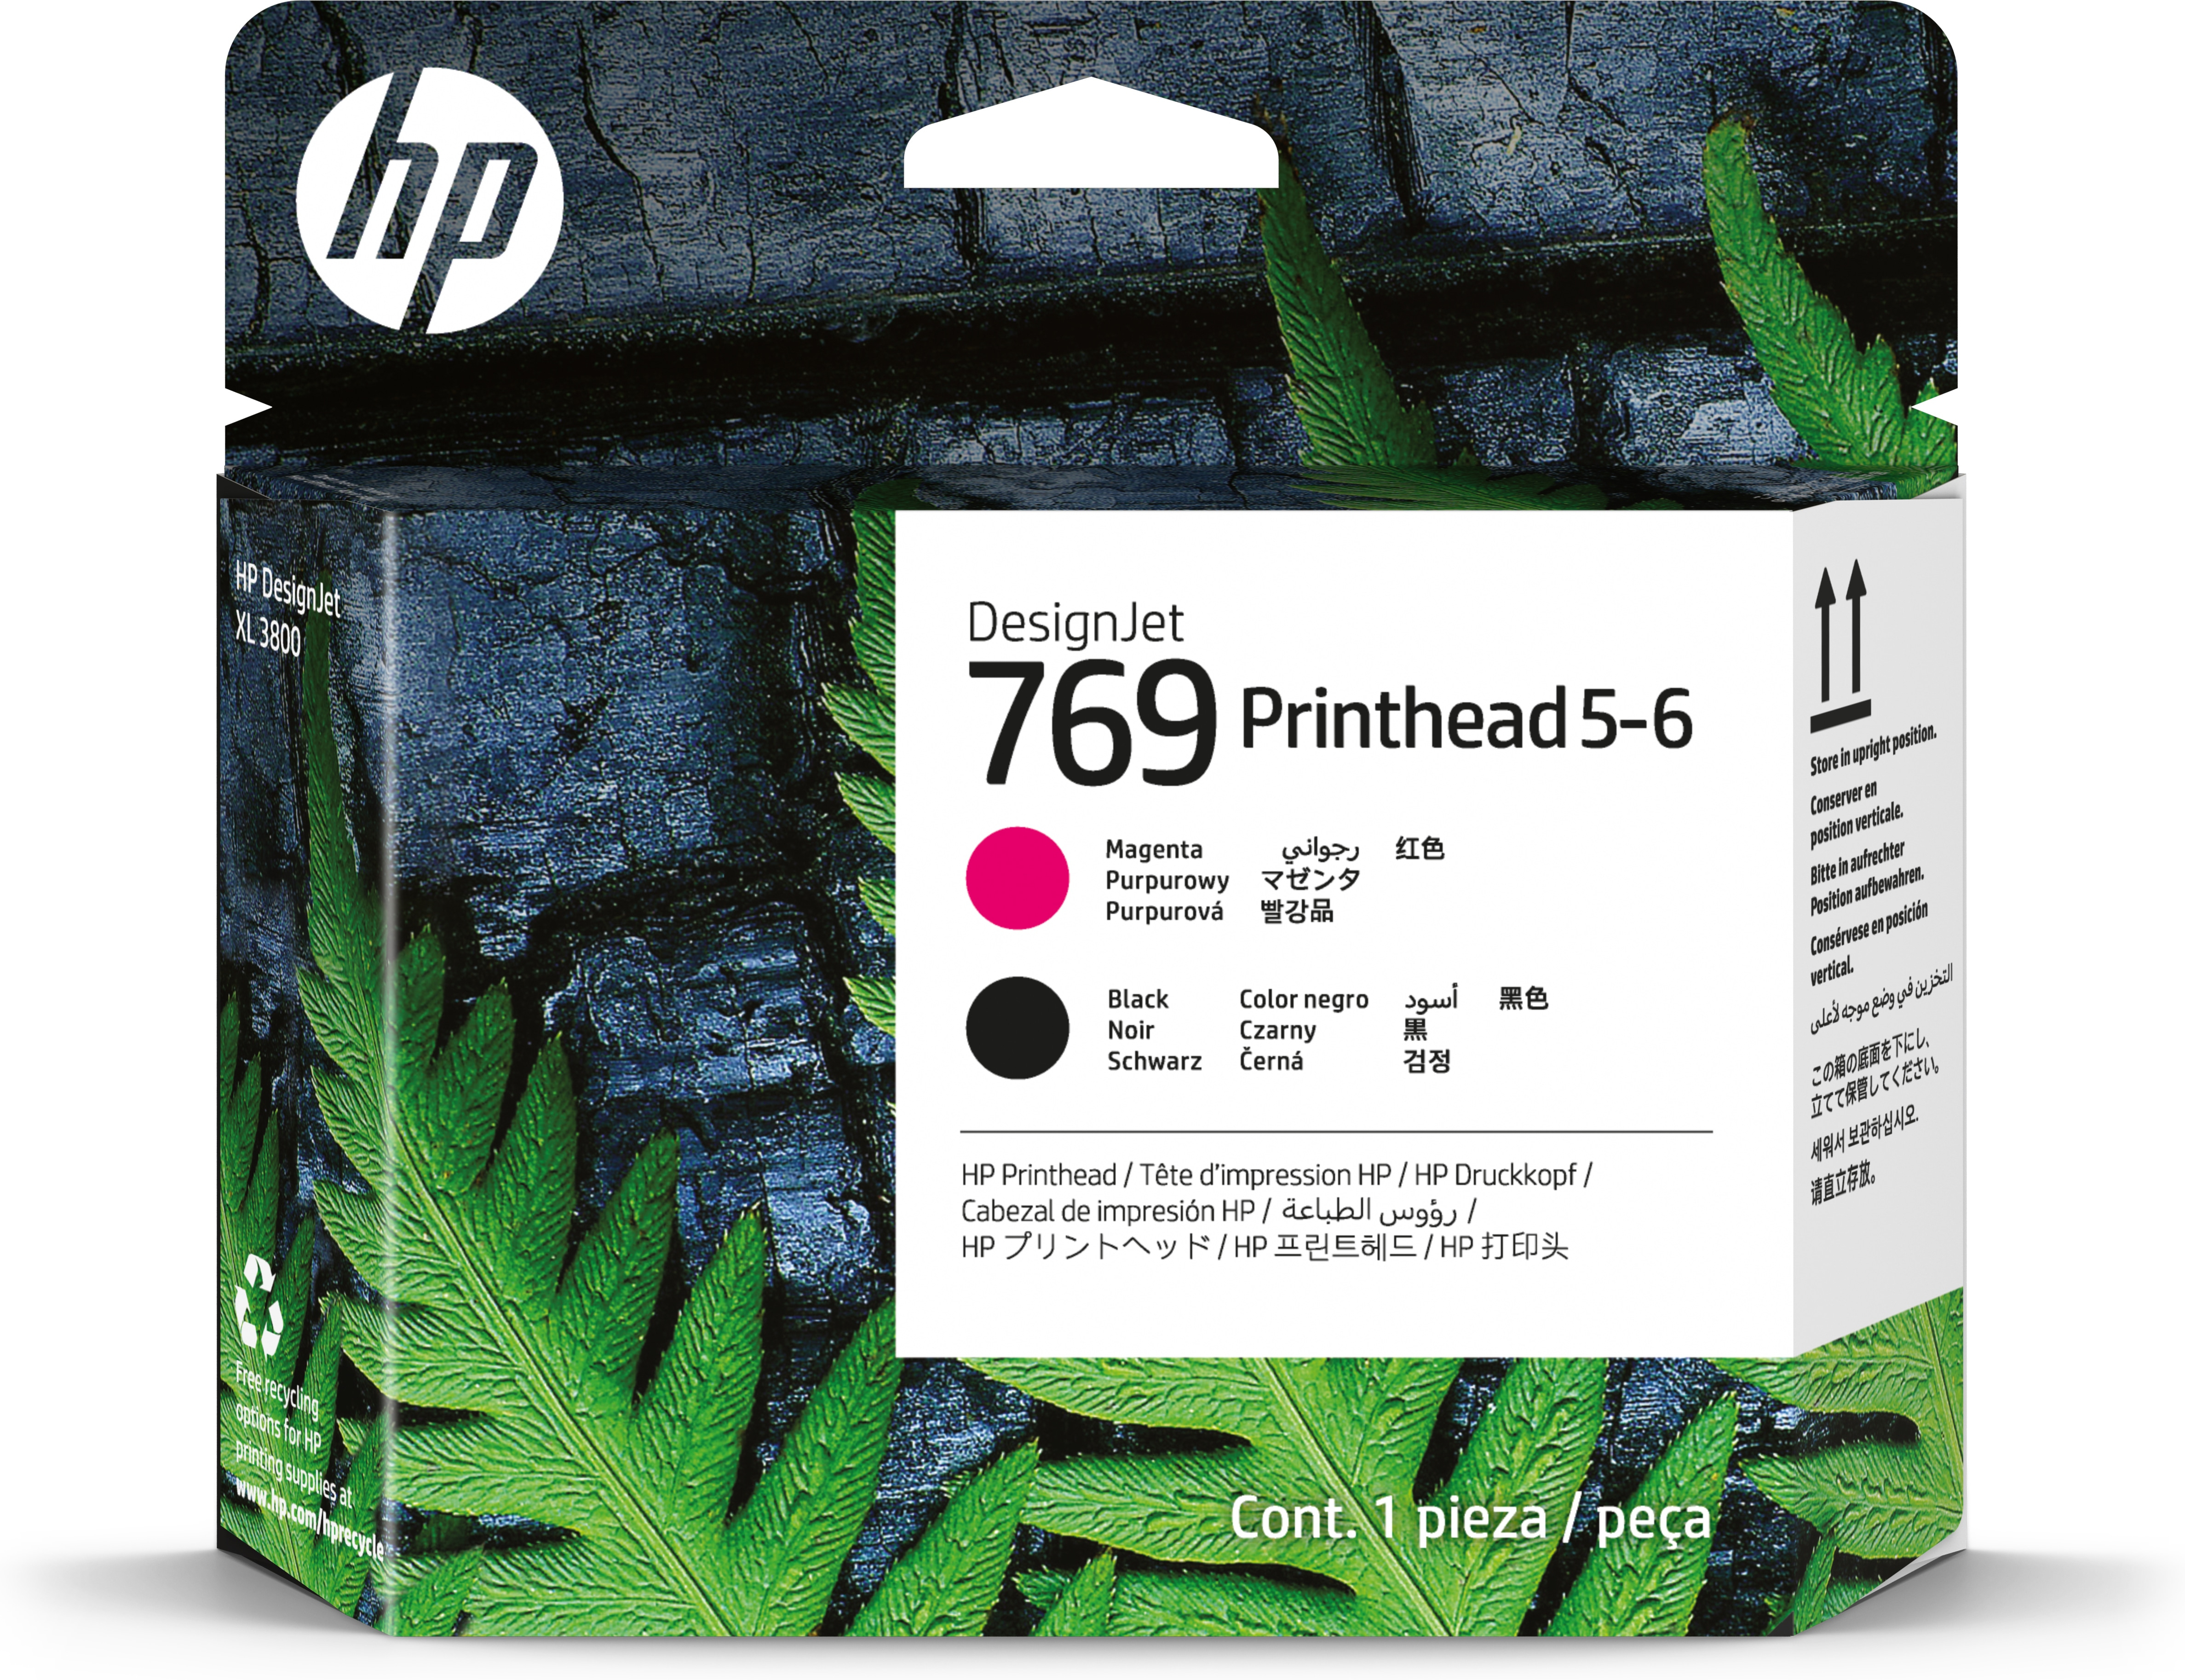 HP 769 MAGENTA BLACK 5-6 DESIGNJET PRINTHEAD